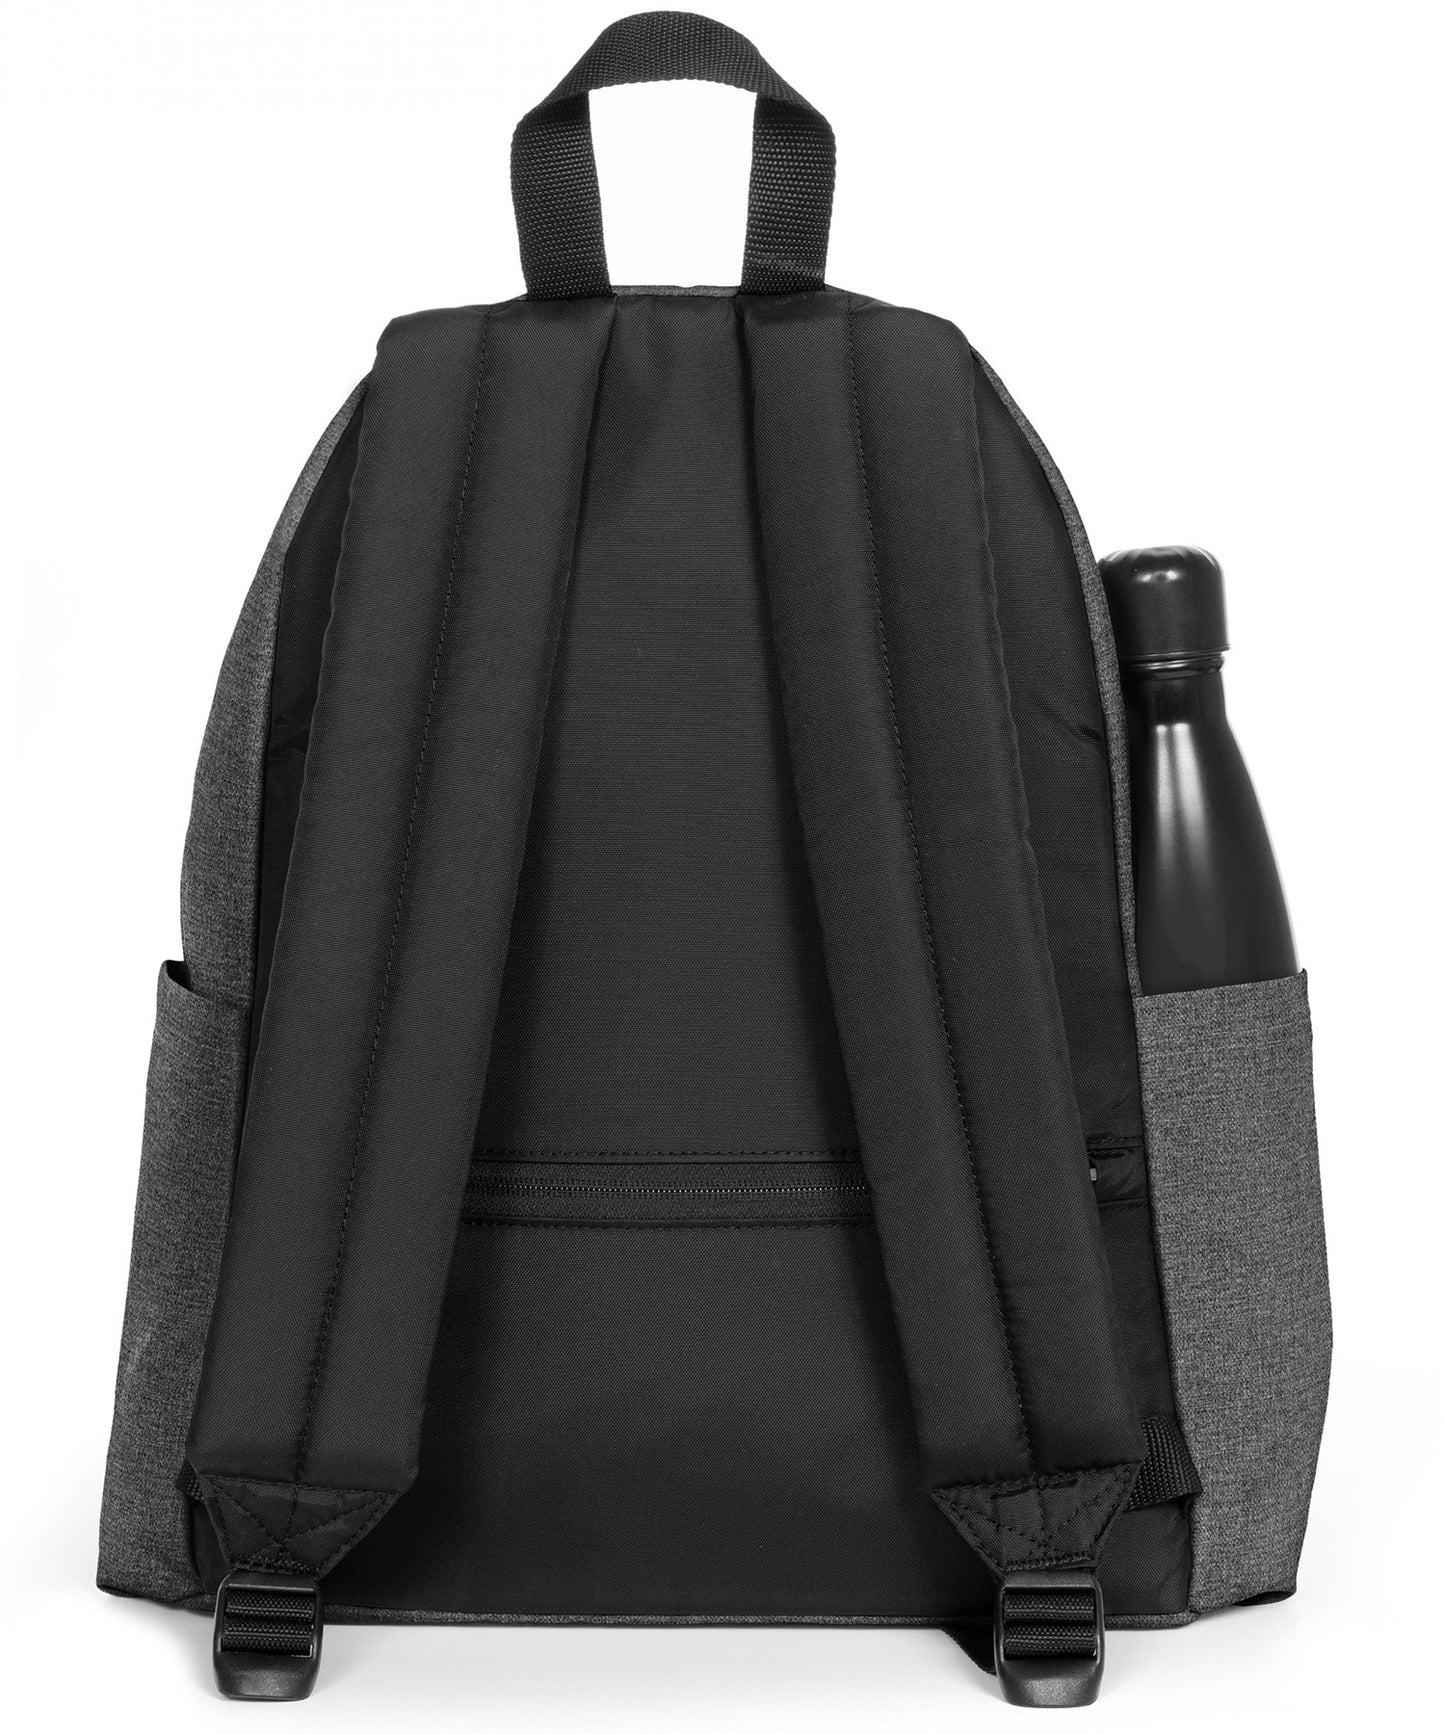 eastpak-mochila-day-pakr-color-negro-denim-4-bolsillos-exteriores-uno-interior-para-laptop-100%-Nylon-40-litros-capacidad.